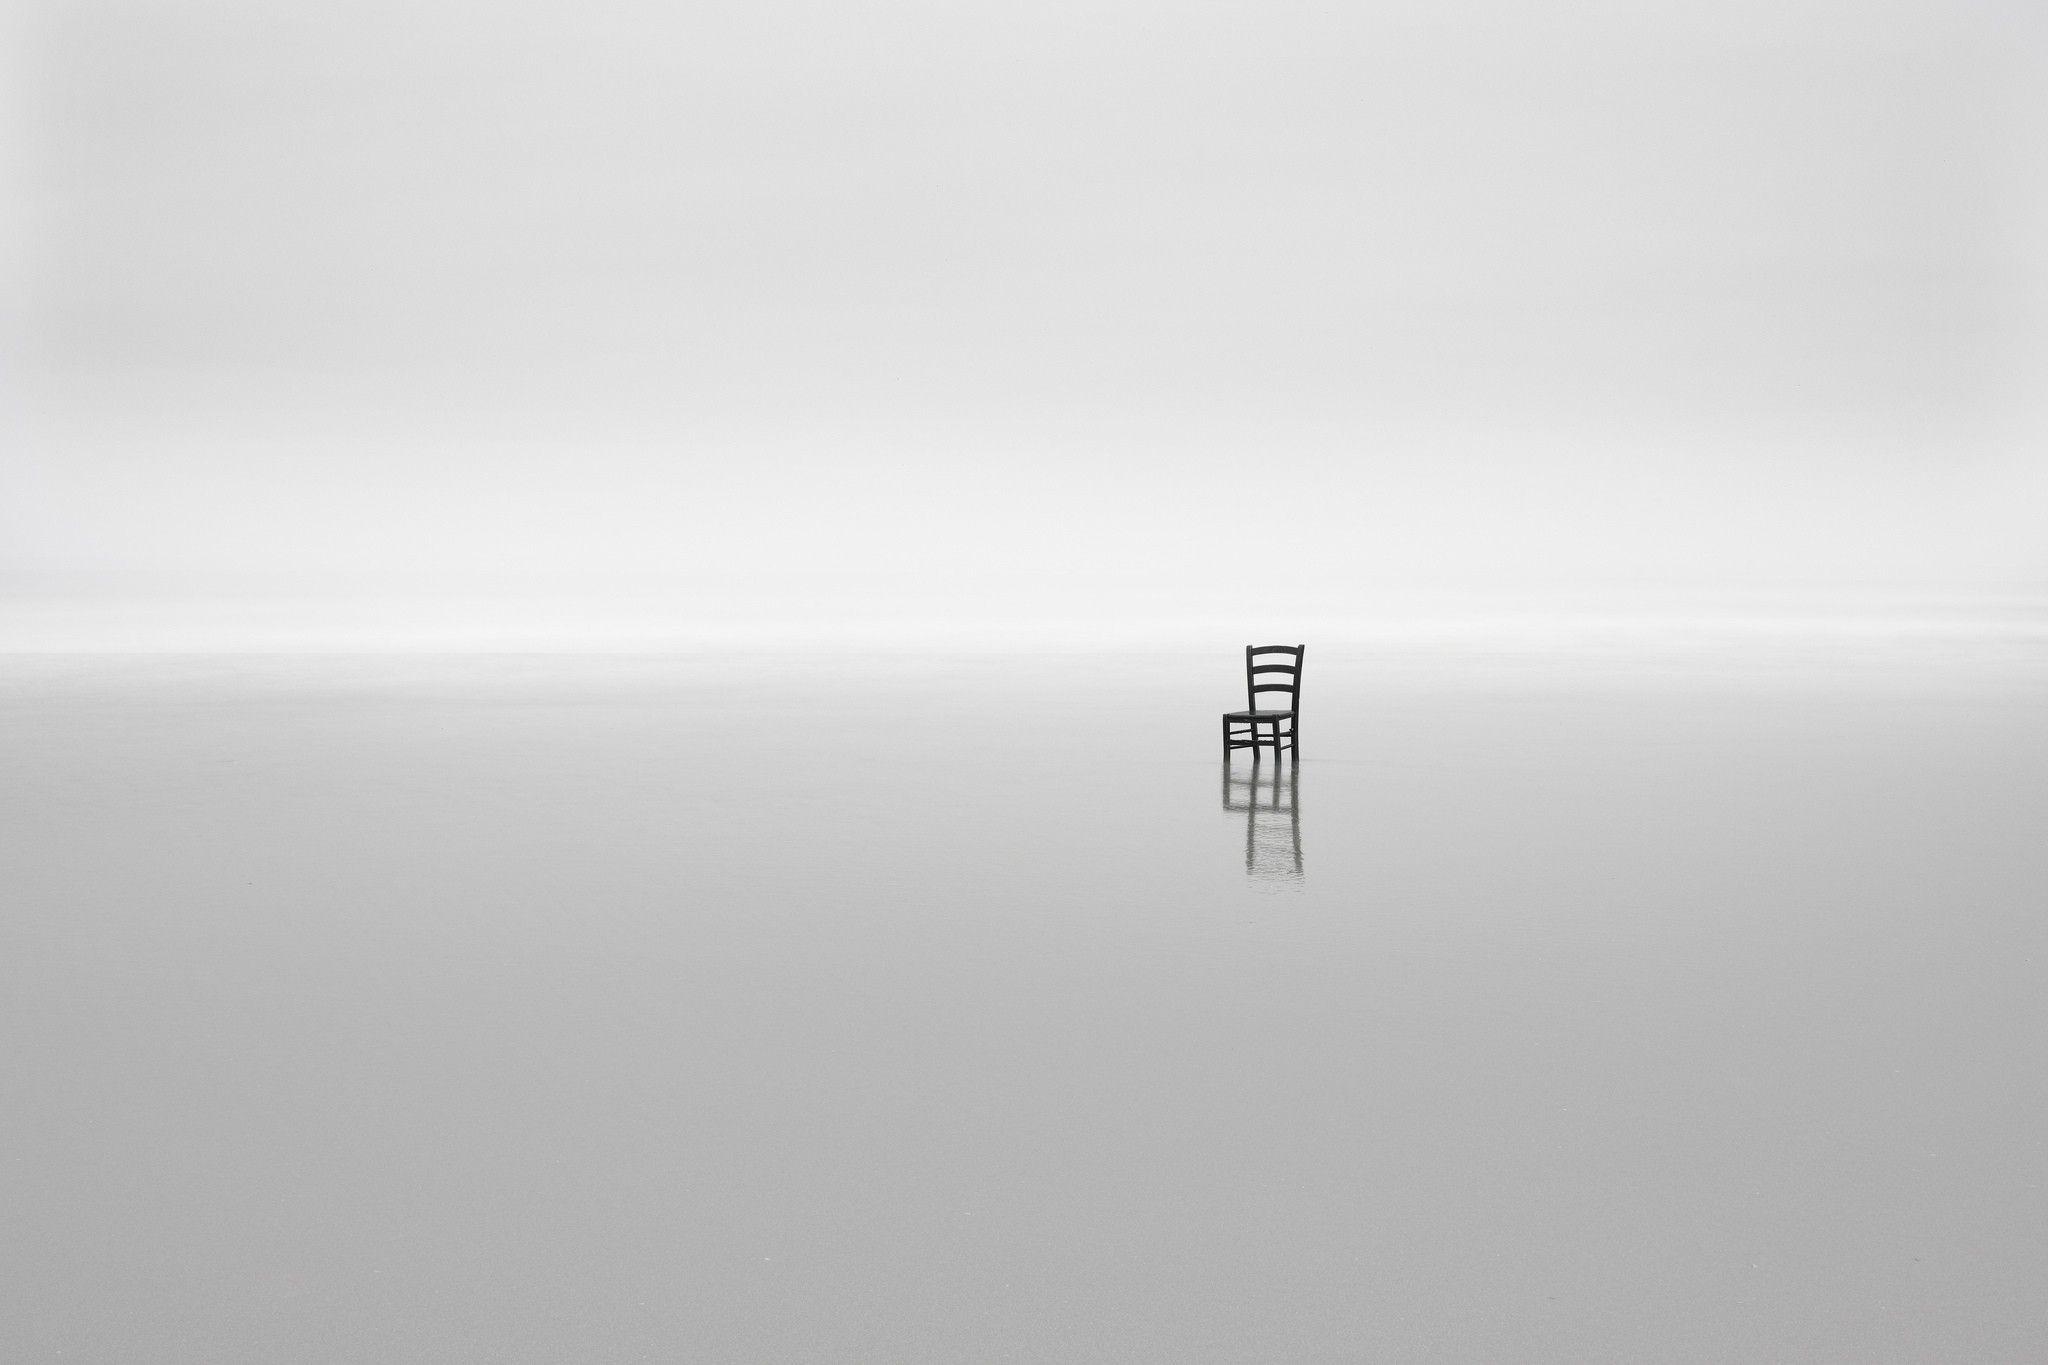 Chair Minimalism, HD Artist, 4k Wallpaper, Image, Background